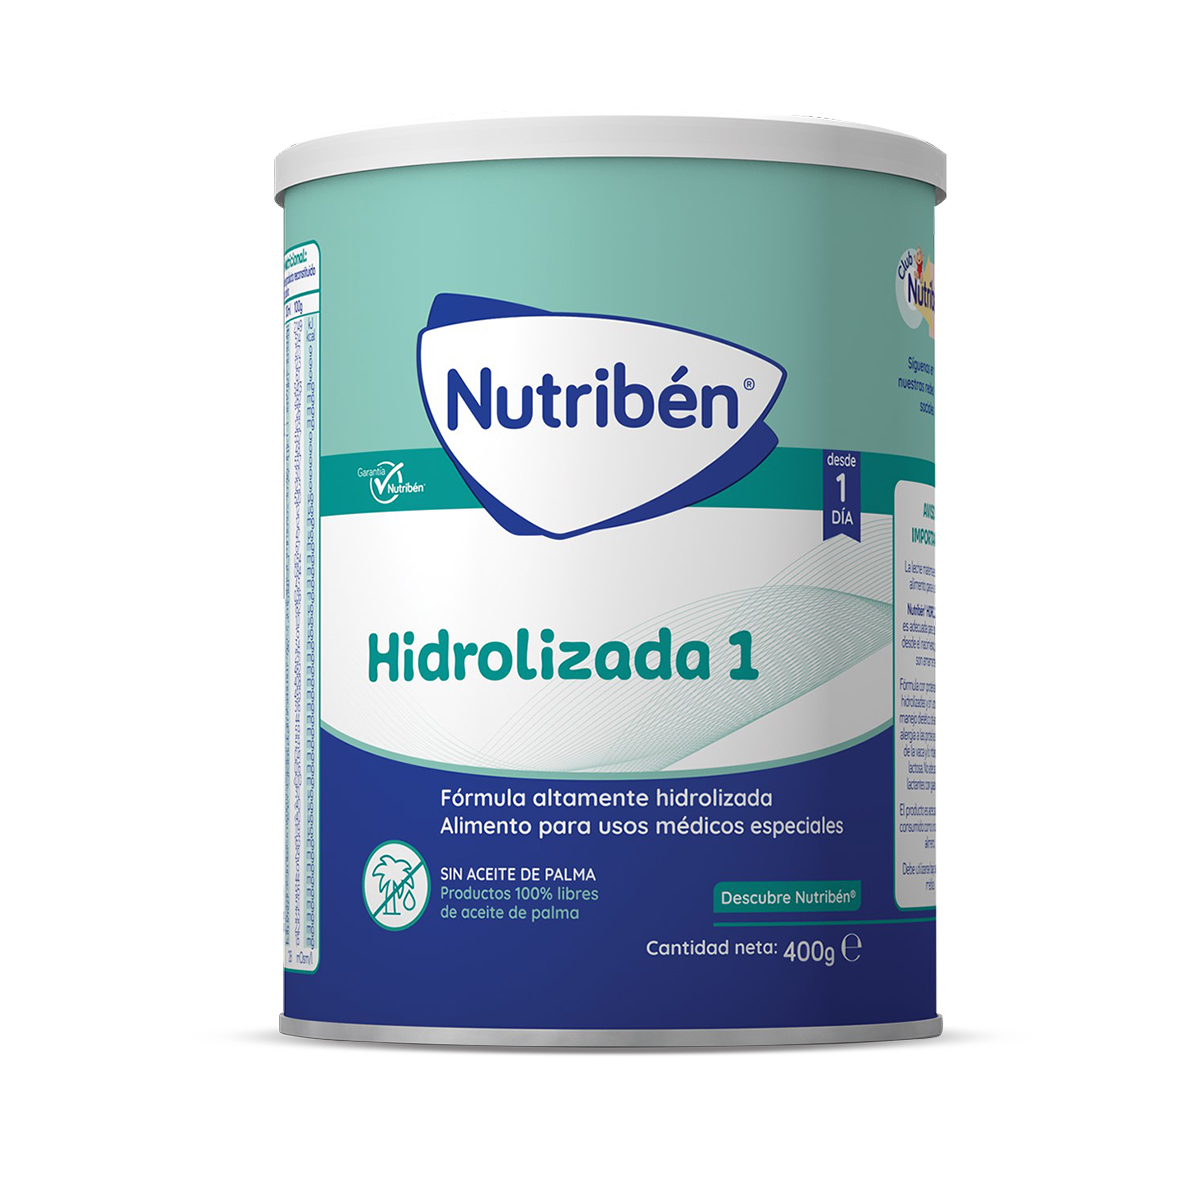 https://www.nutriben.es/wp-content/uploads/2021/12/leche-nutriben-hidrolizada-1-para-bebes.jpg